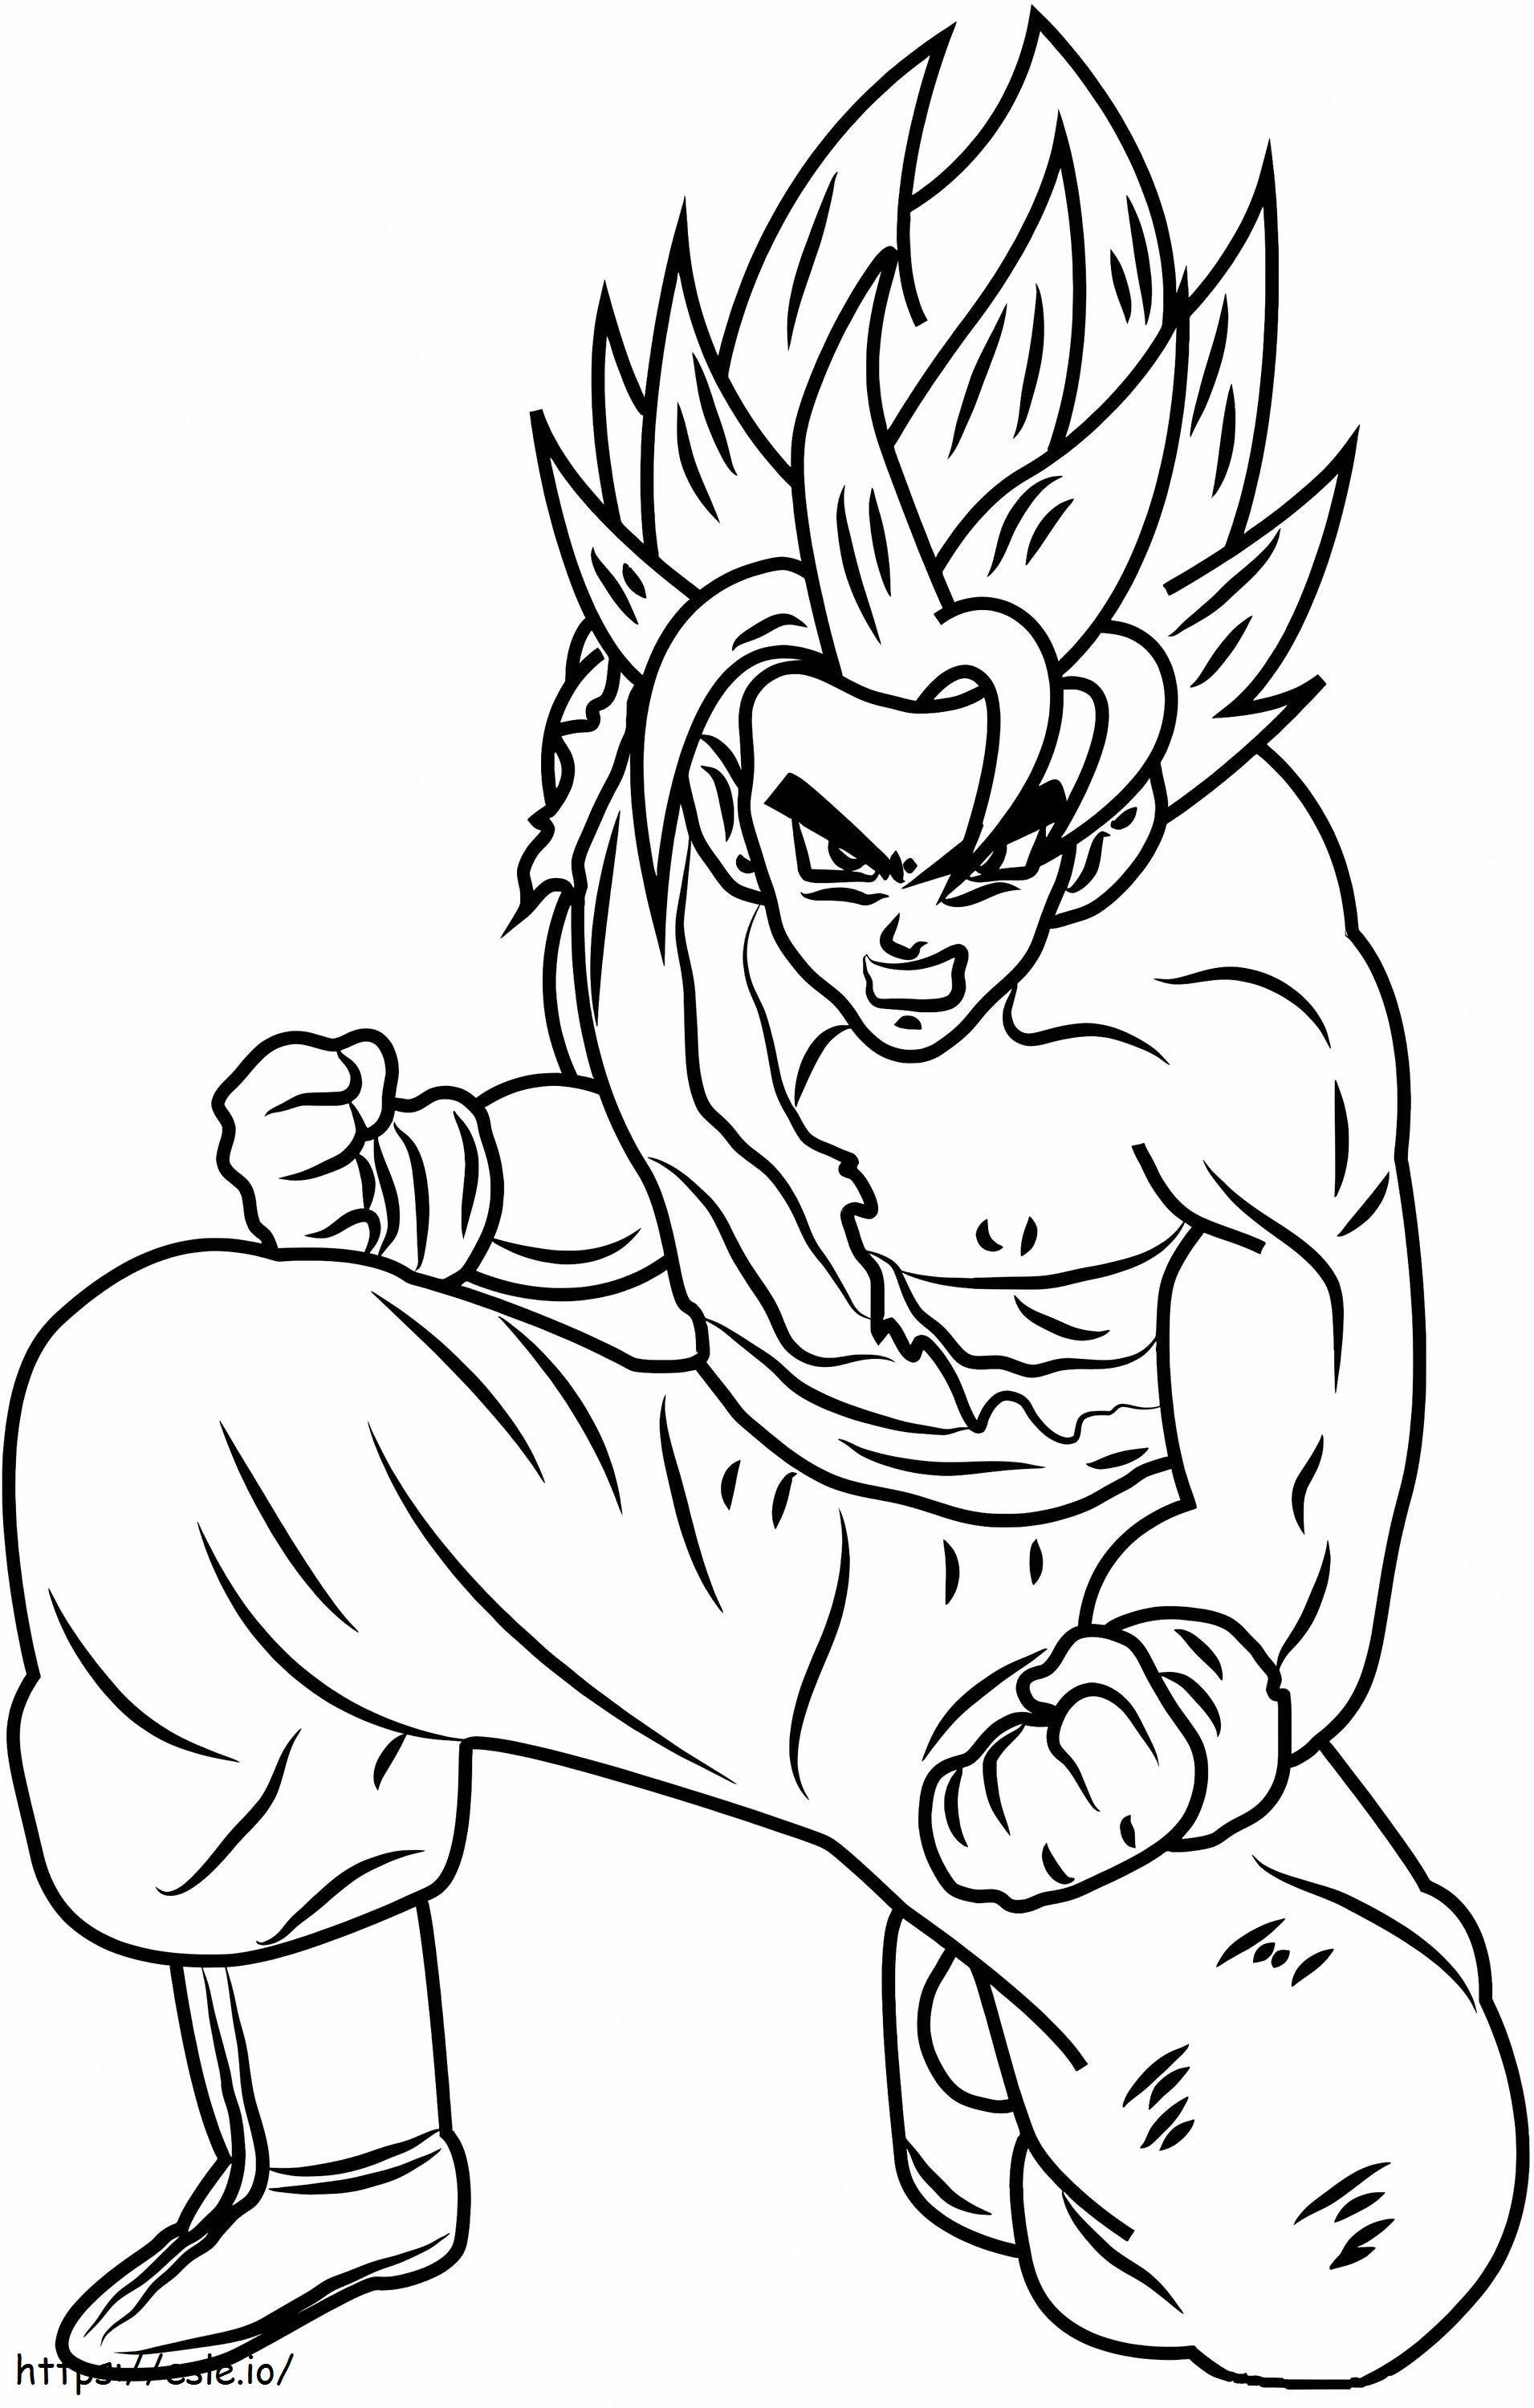 Son Goku harcol kifestő